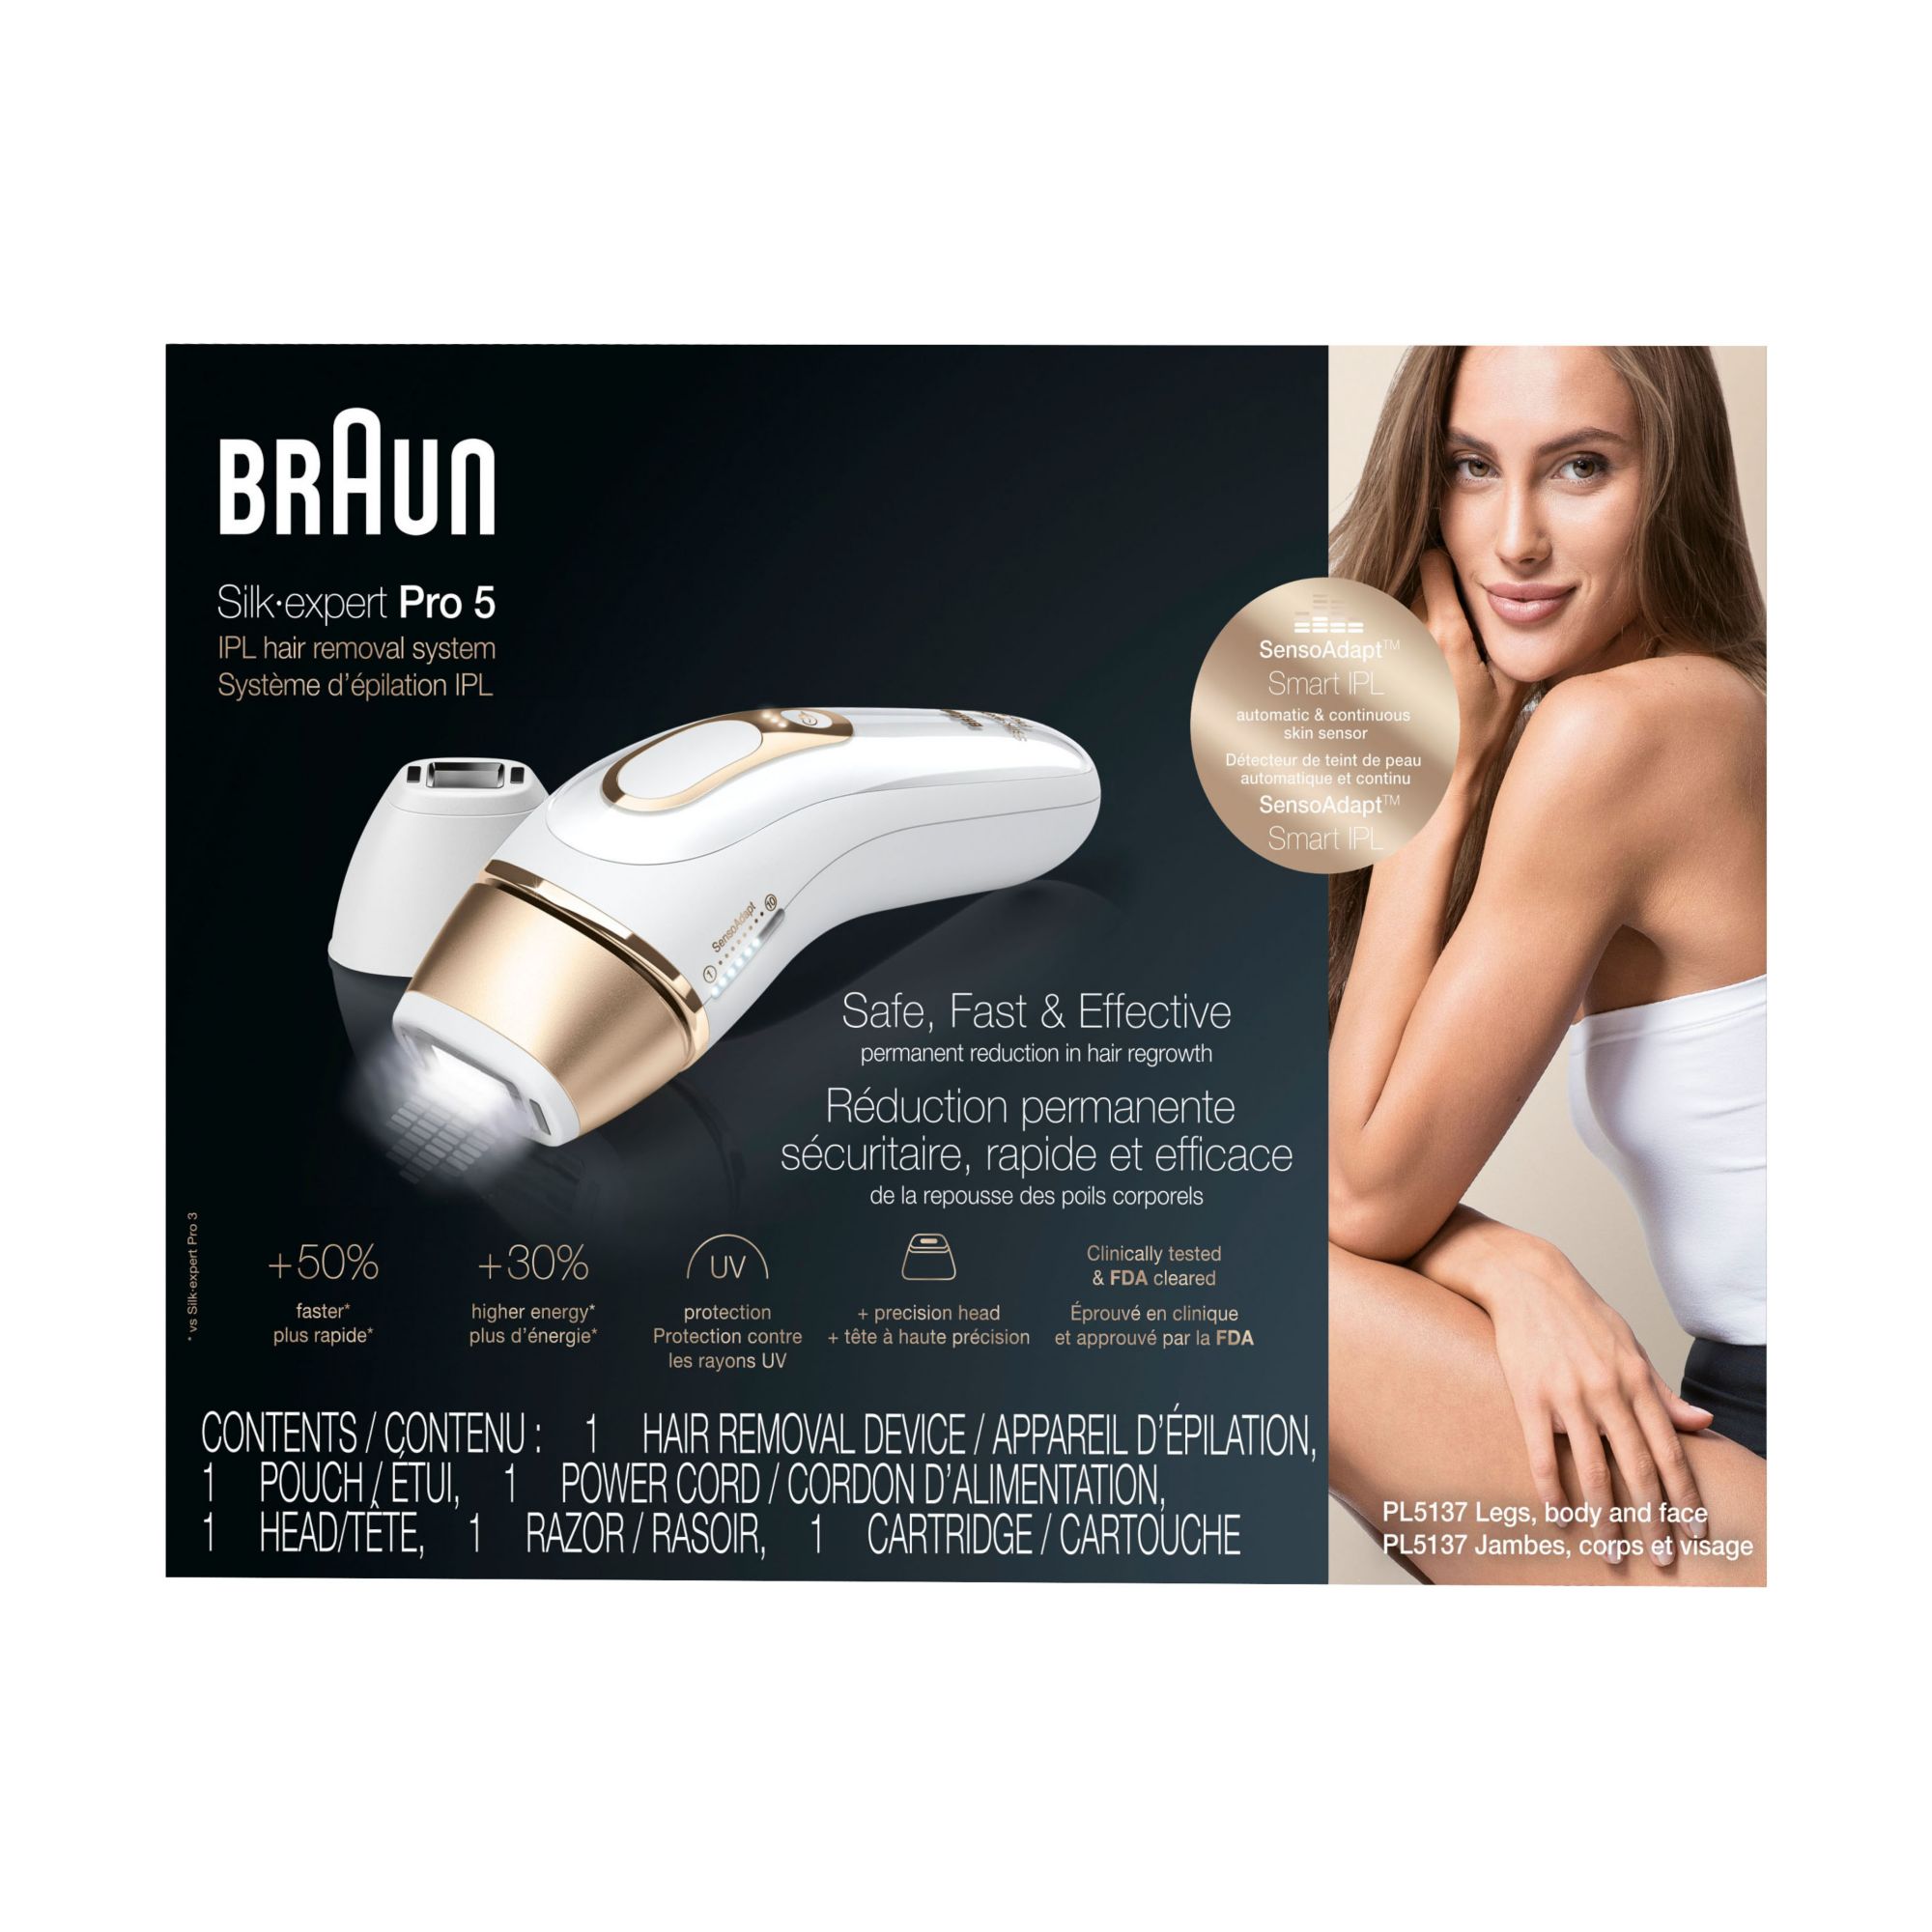 Braun: Silk Expert Pro 5 IPL Hair Removal - PL5137 with Venus